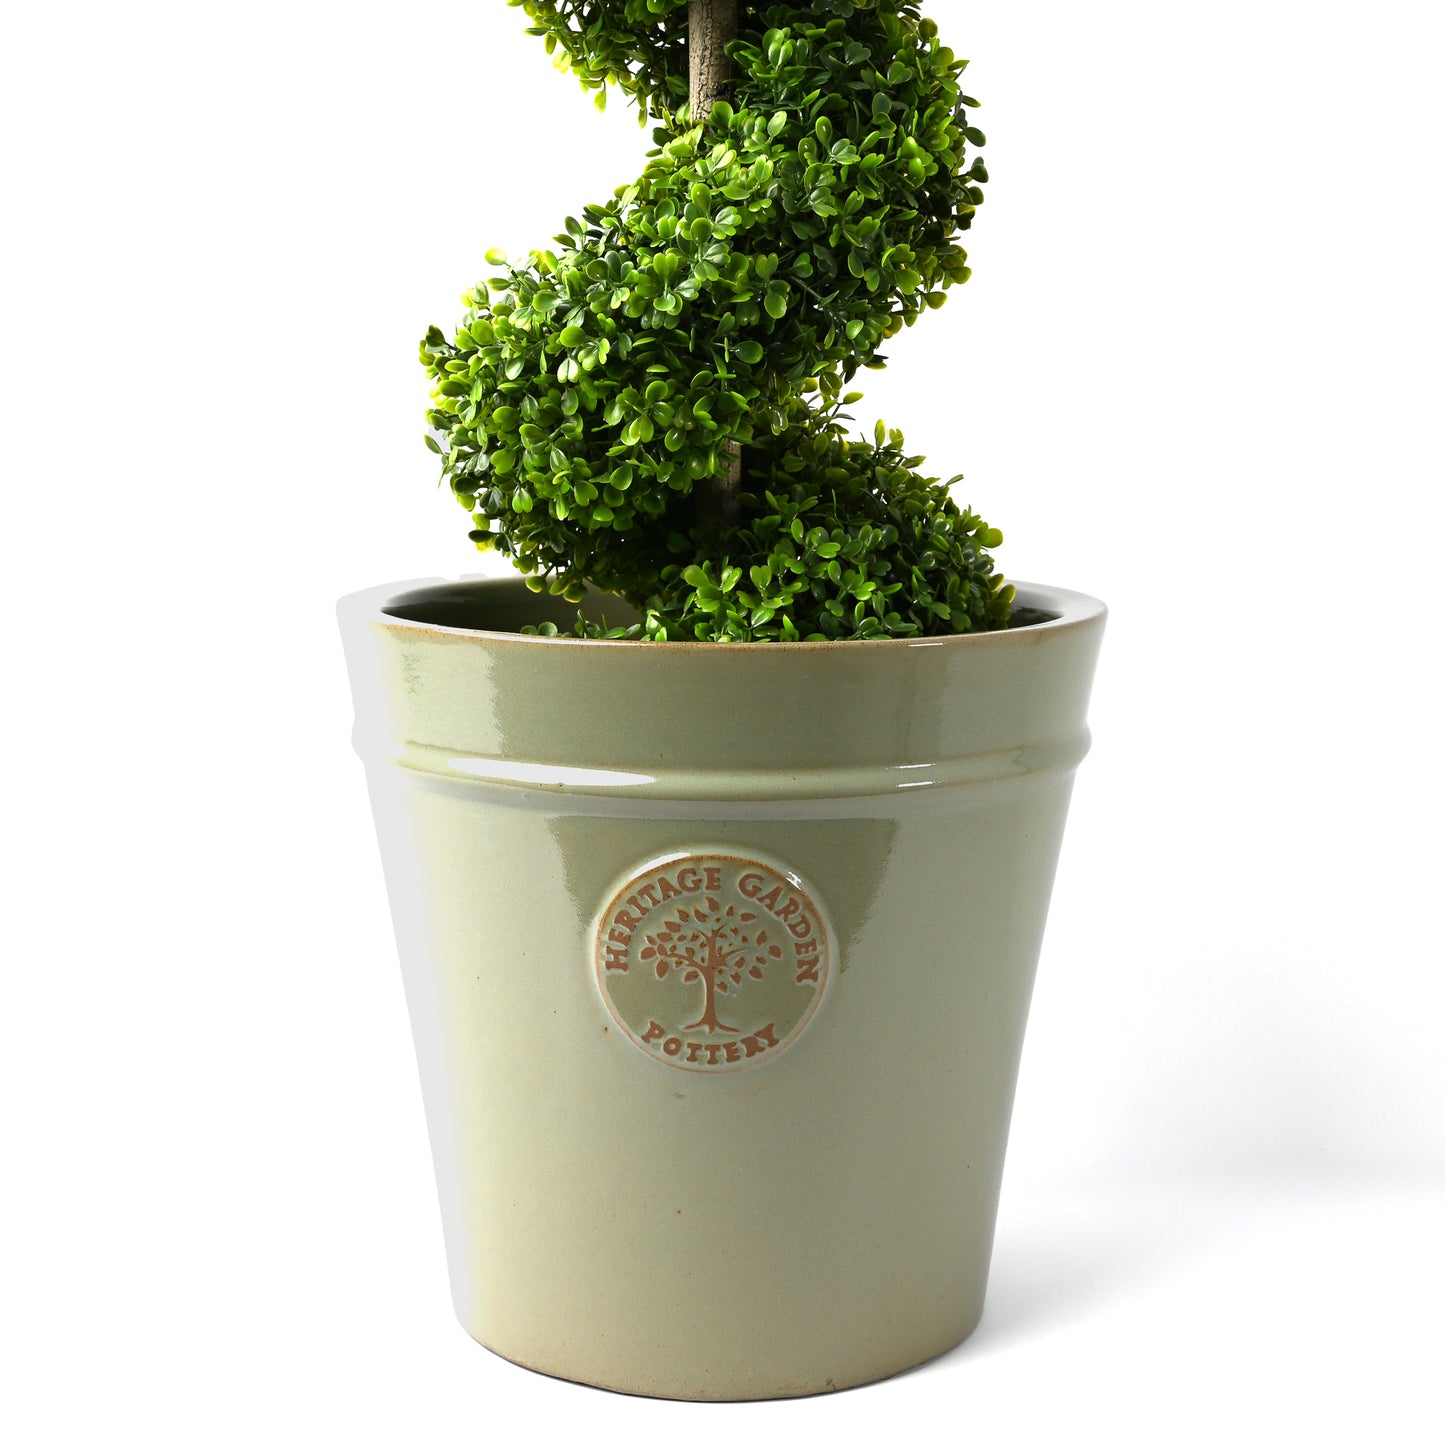 Swirly topiary in matching green pot